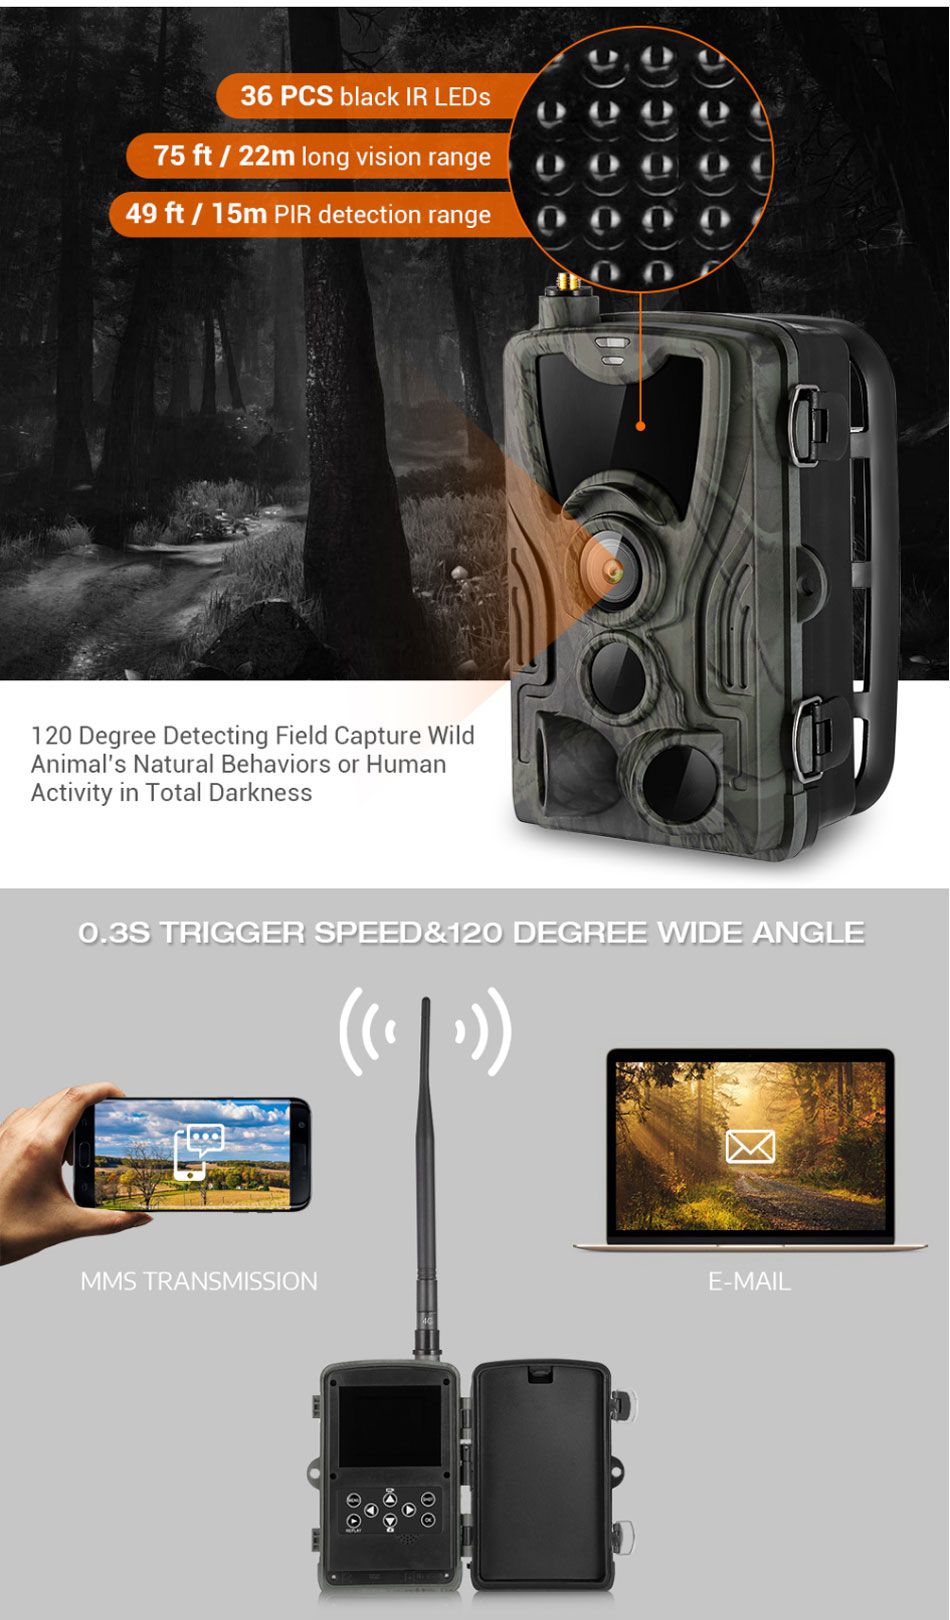 HC-801LTE-4G-16MP-1080P-HD-Waterproof-SMSMMSSMTP-Hunting-Wildlife-Trail-Track-Camera-Night-Version-1528901